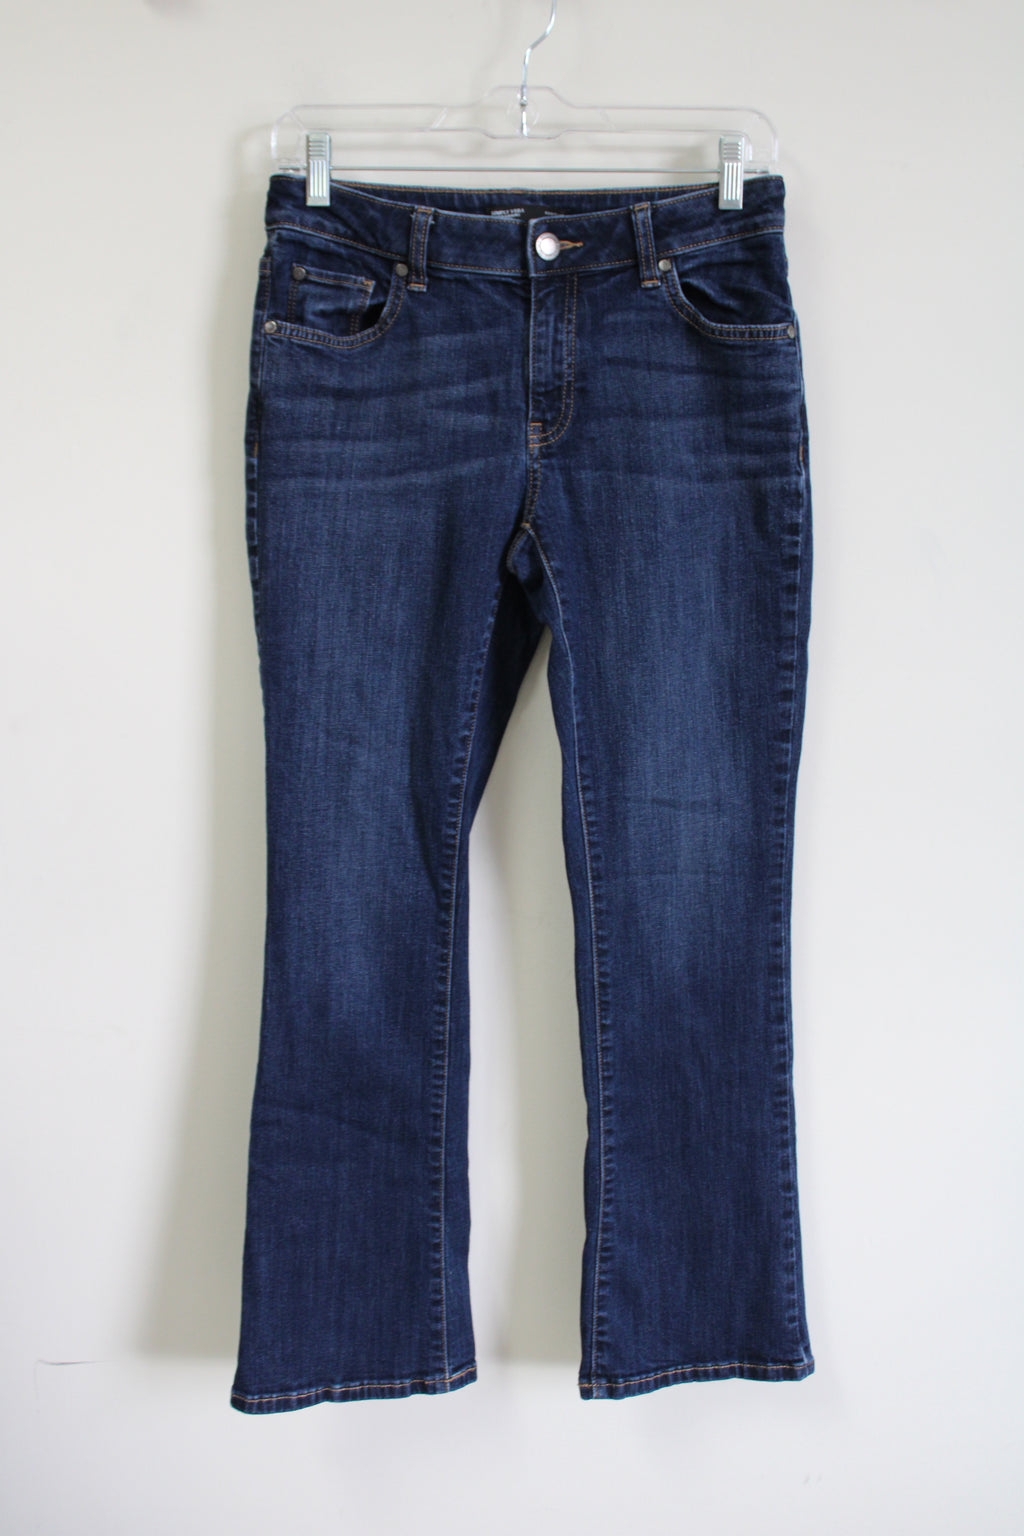 Simply Vera Wang Bootcut Jeans | 6 Petite